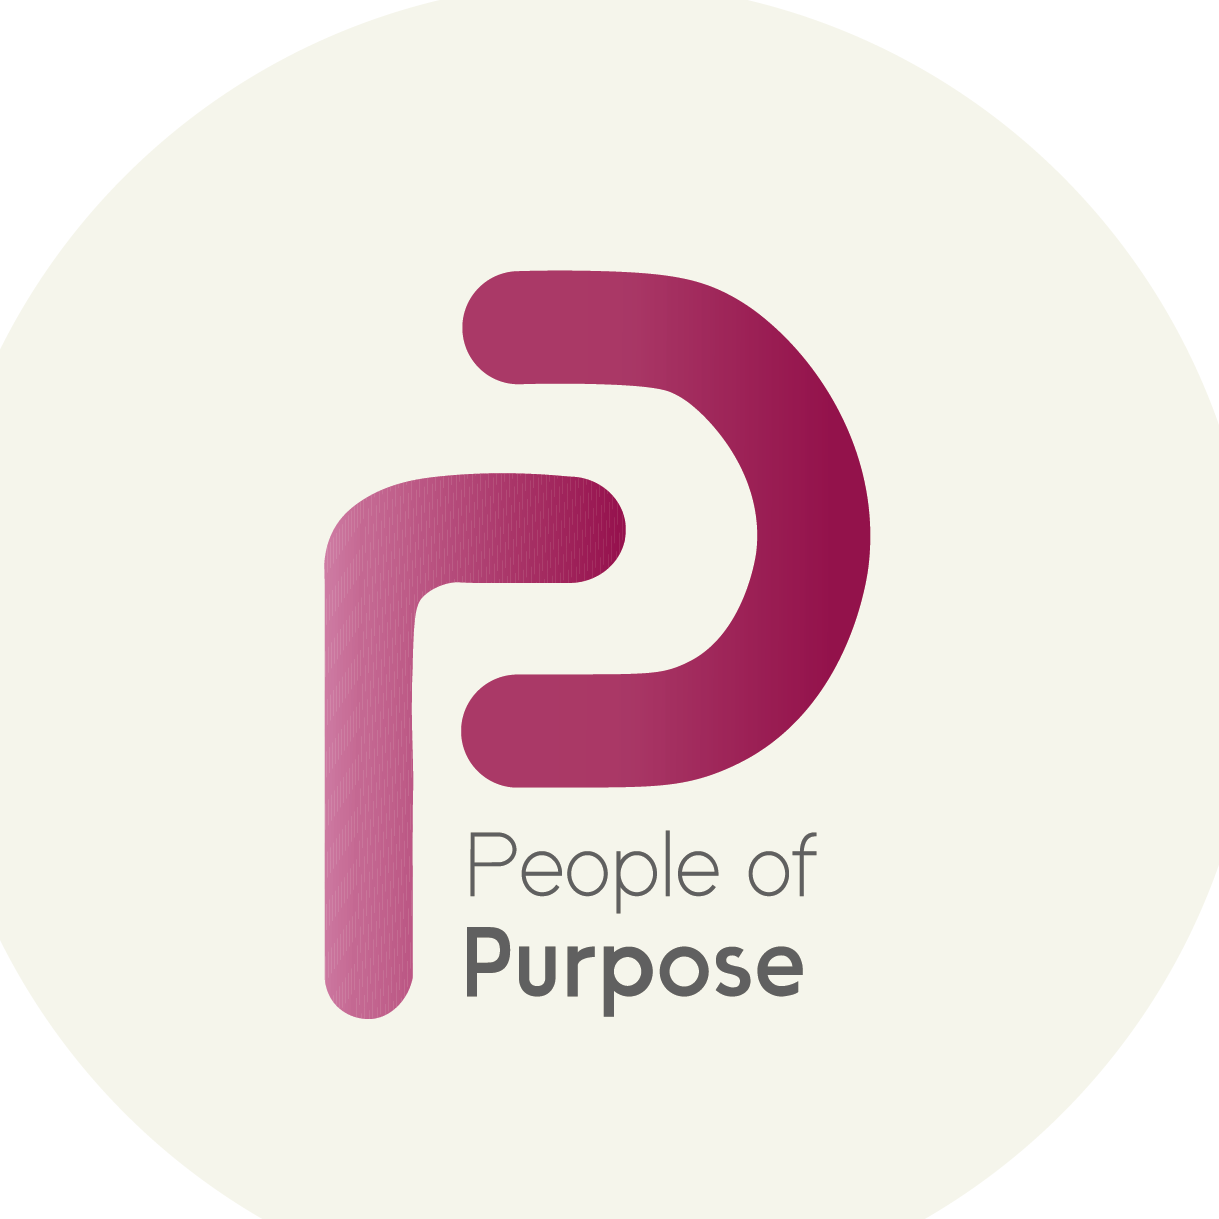 People of purpose logo